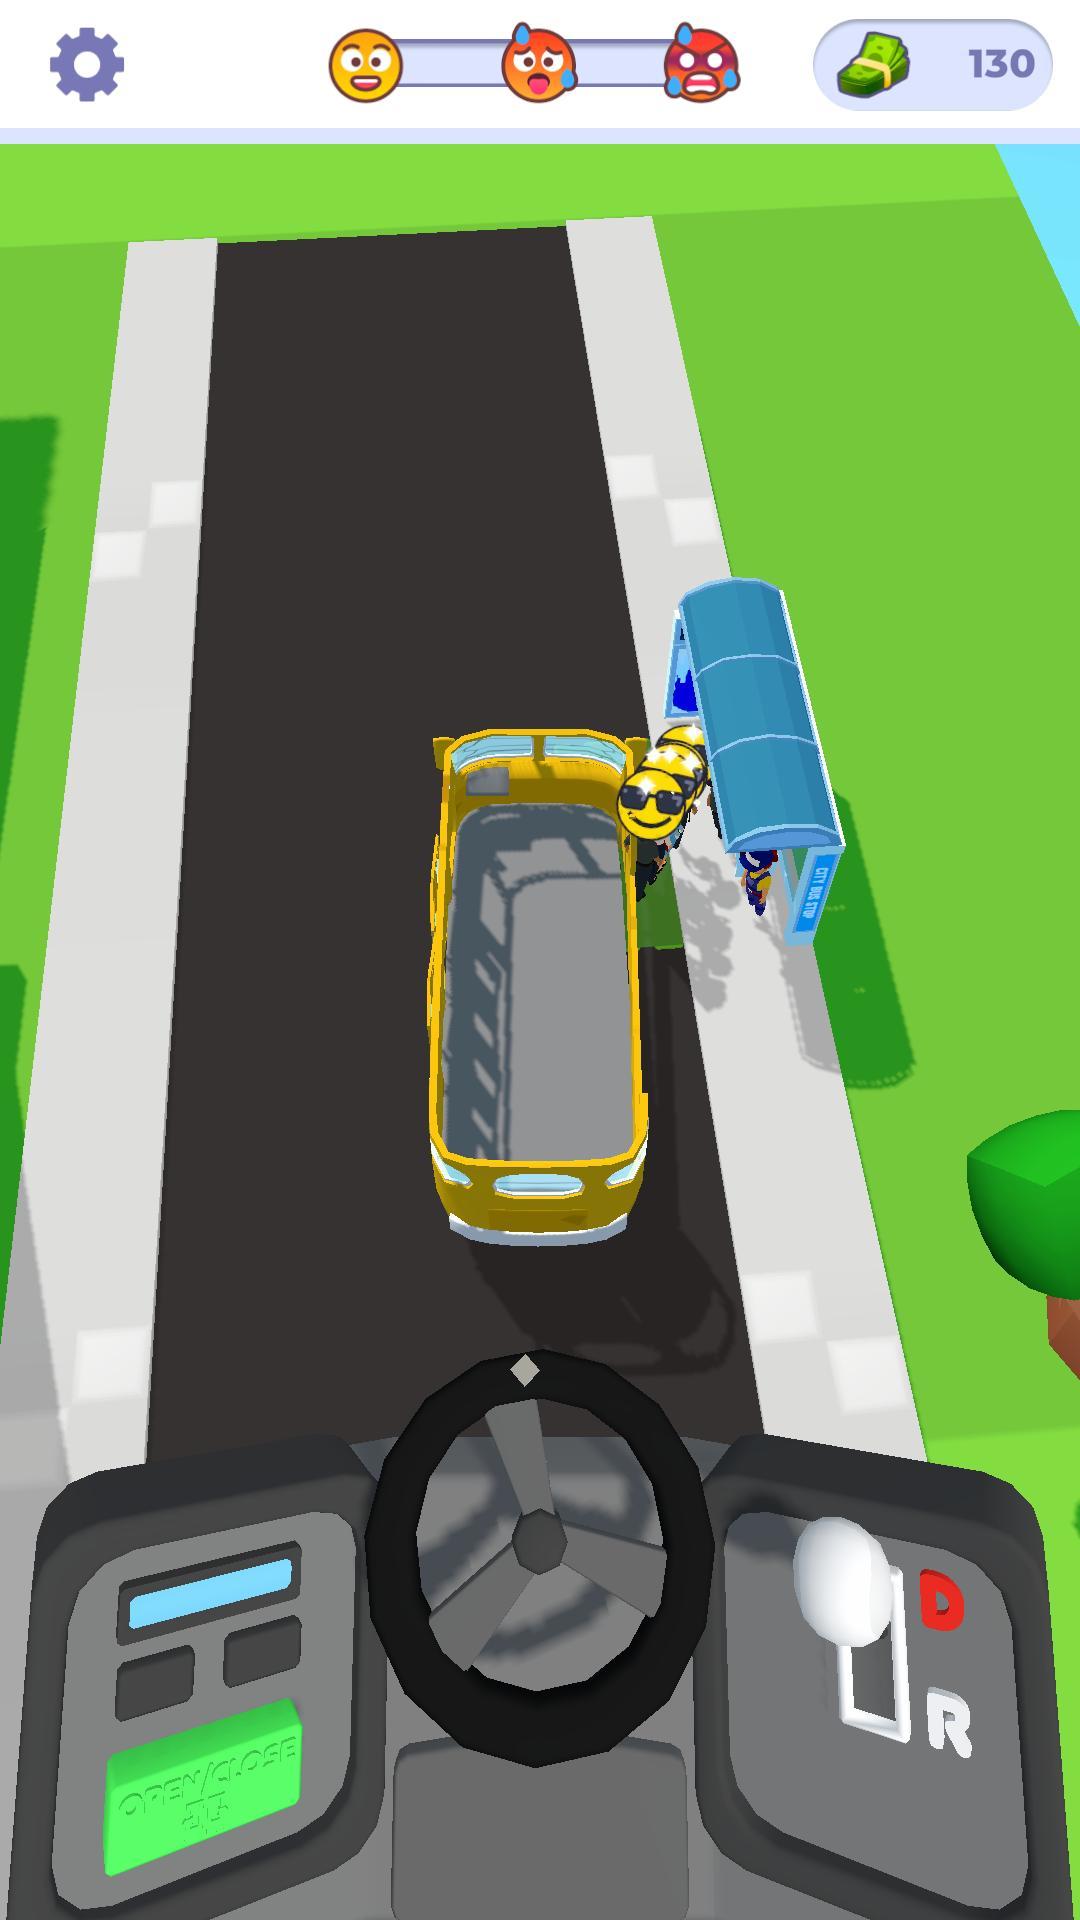 Screenshot 1 of ဘတ်စ်ကား မောင်းနှင်ခြင်း Simulator မလှုပ်မရှား 1.0.1